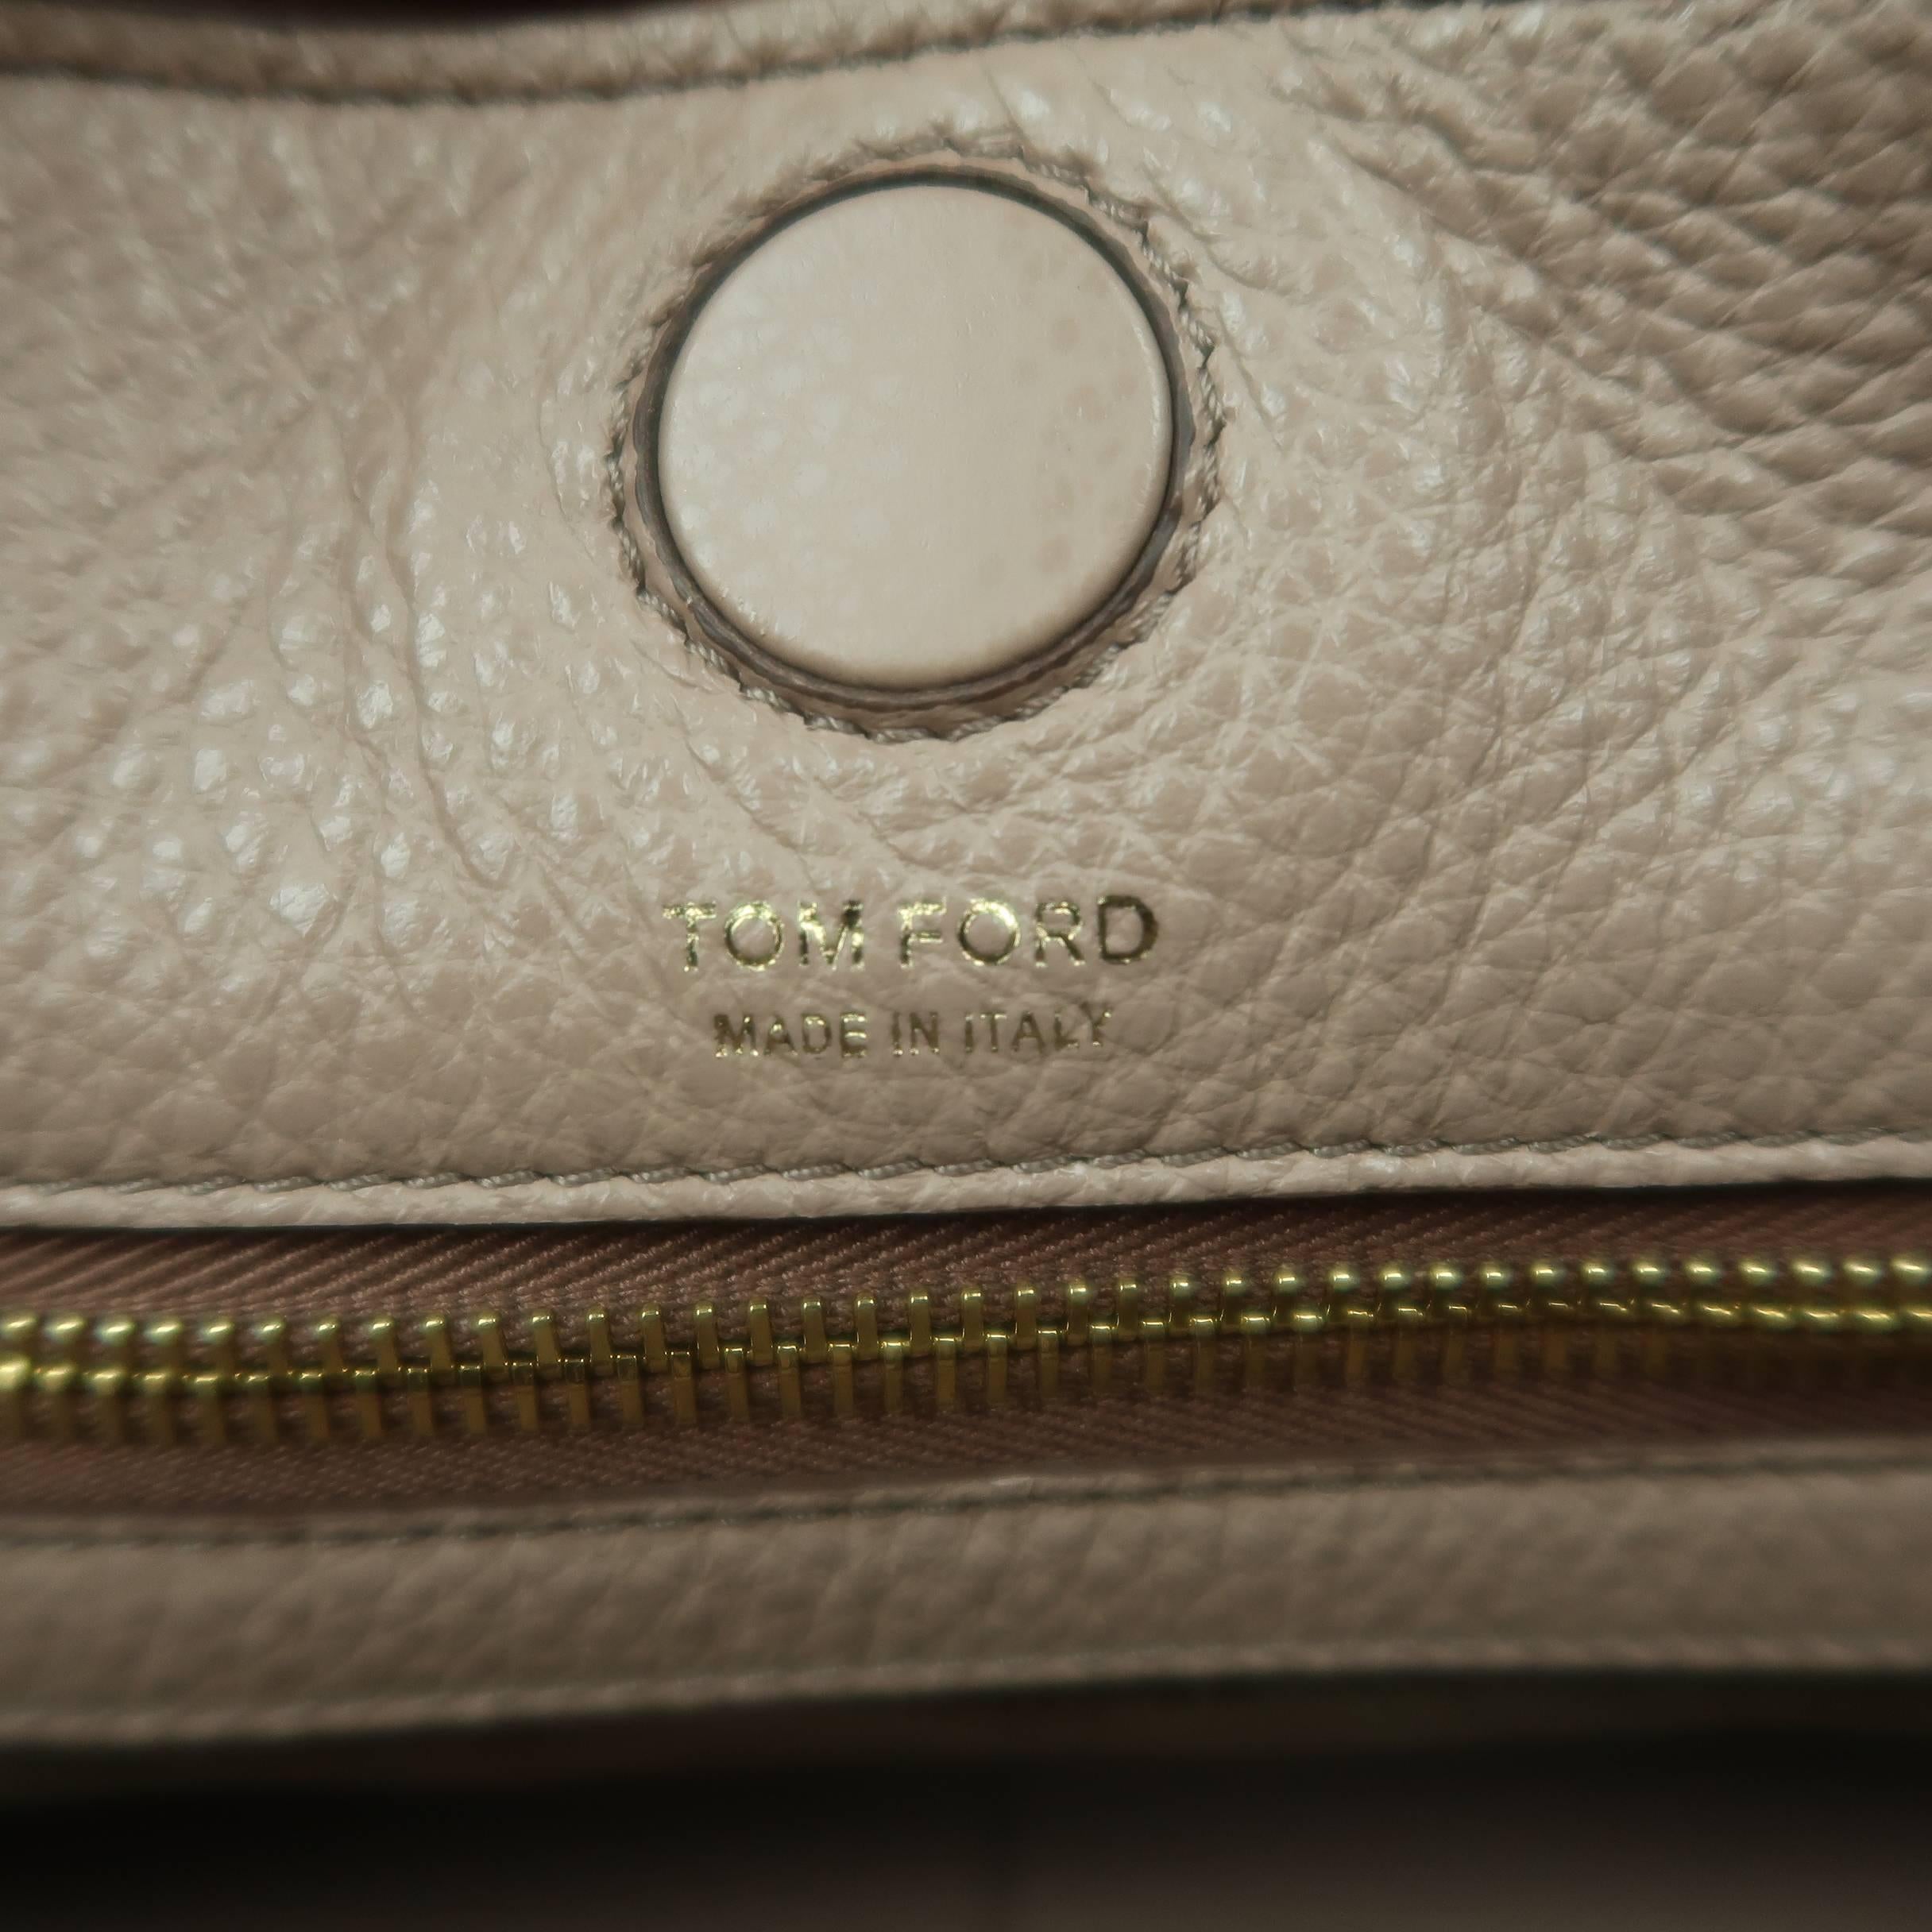 Tom Ford Handbag - Alix - Nude Textured Leather Gold Padlock Clutch Bag 5